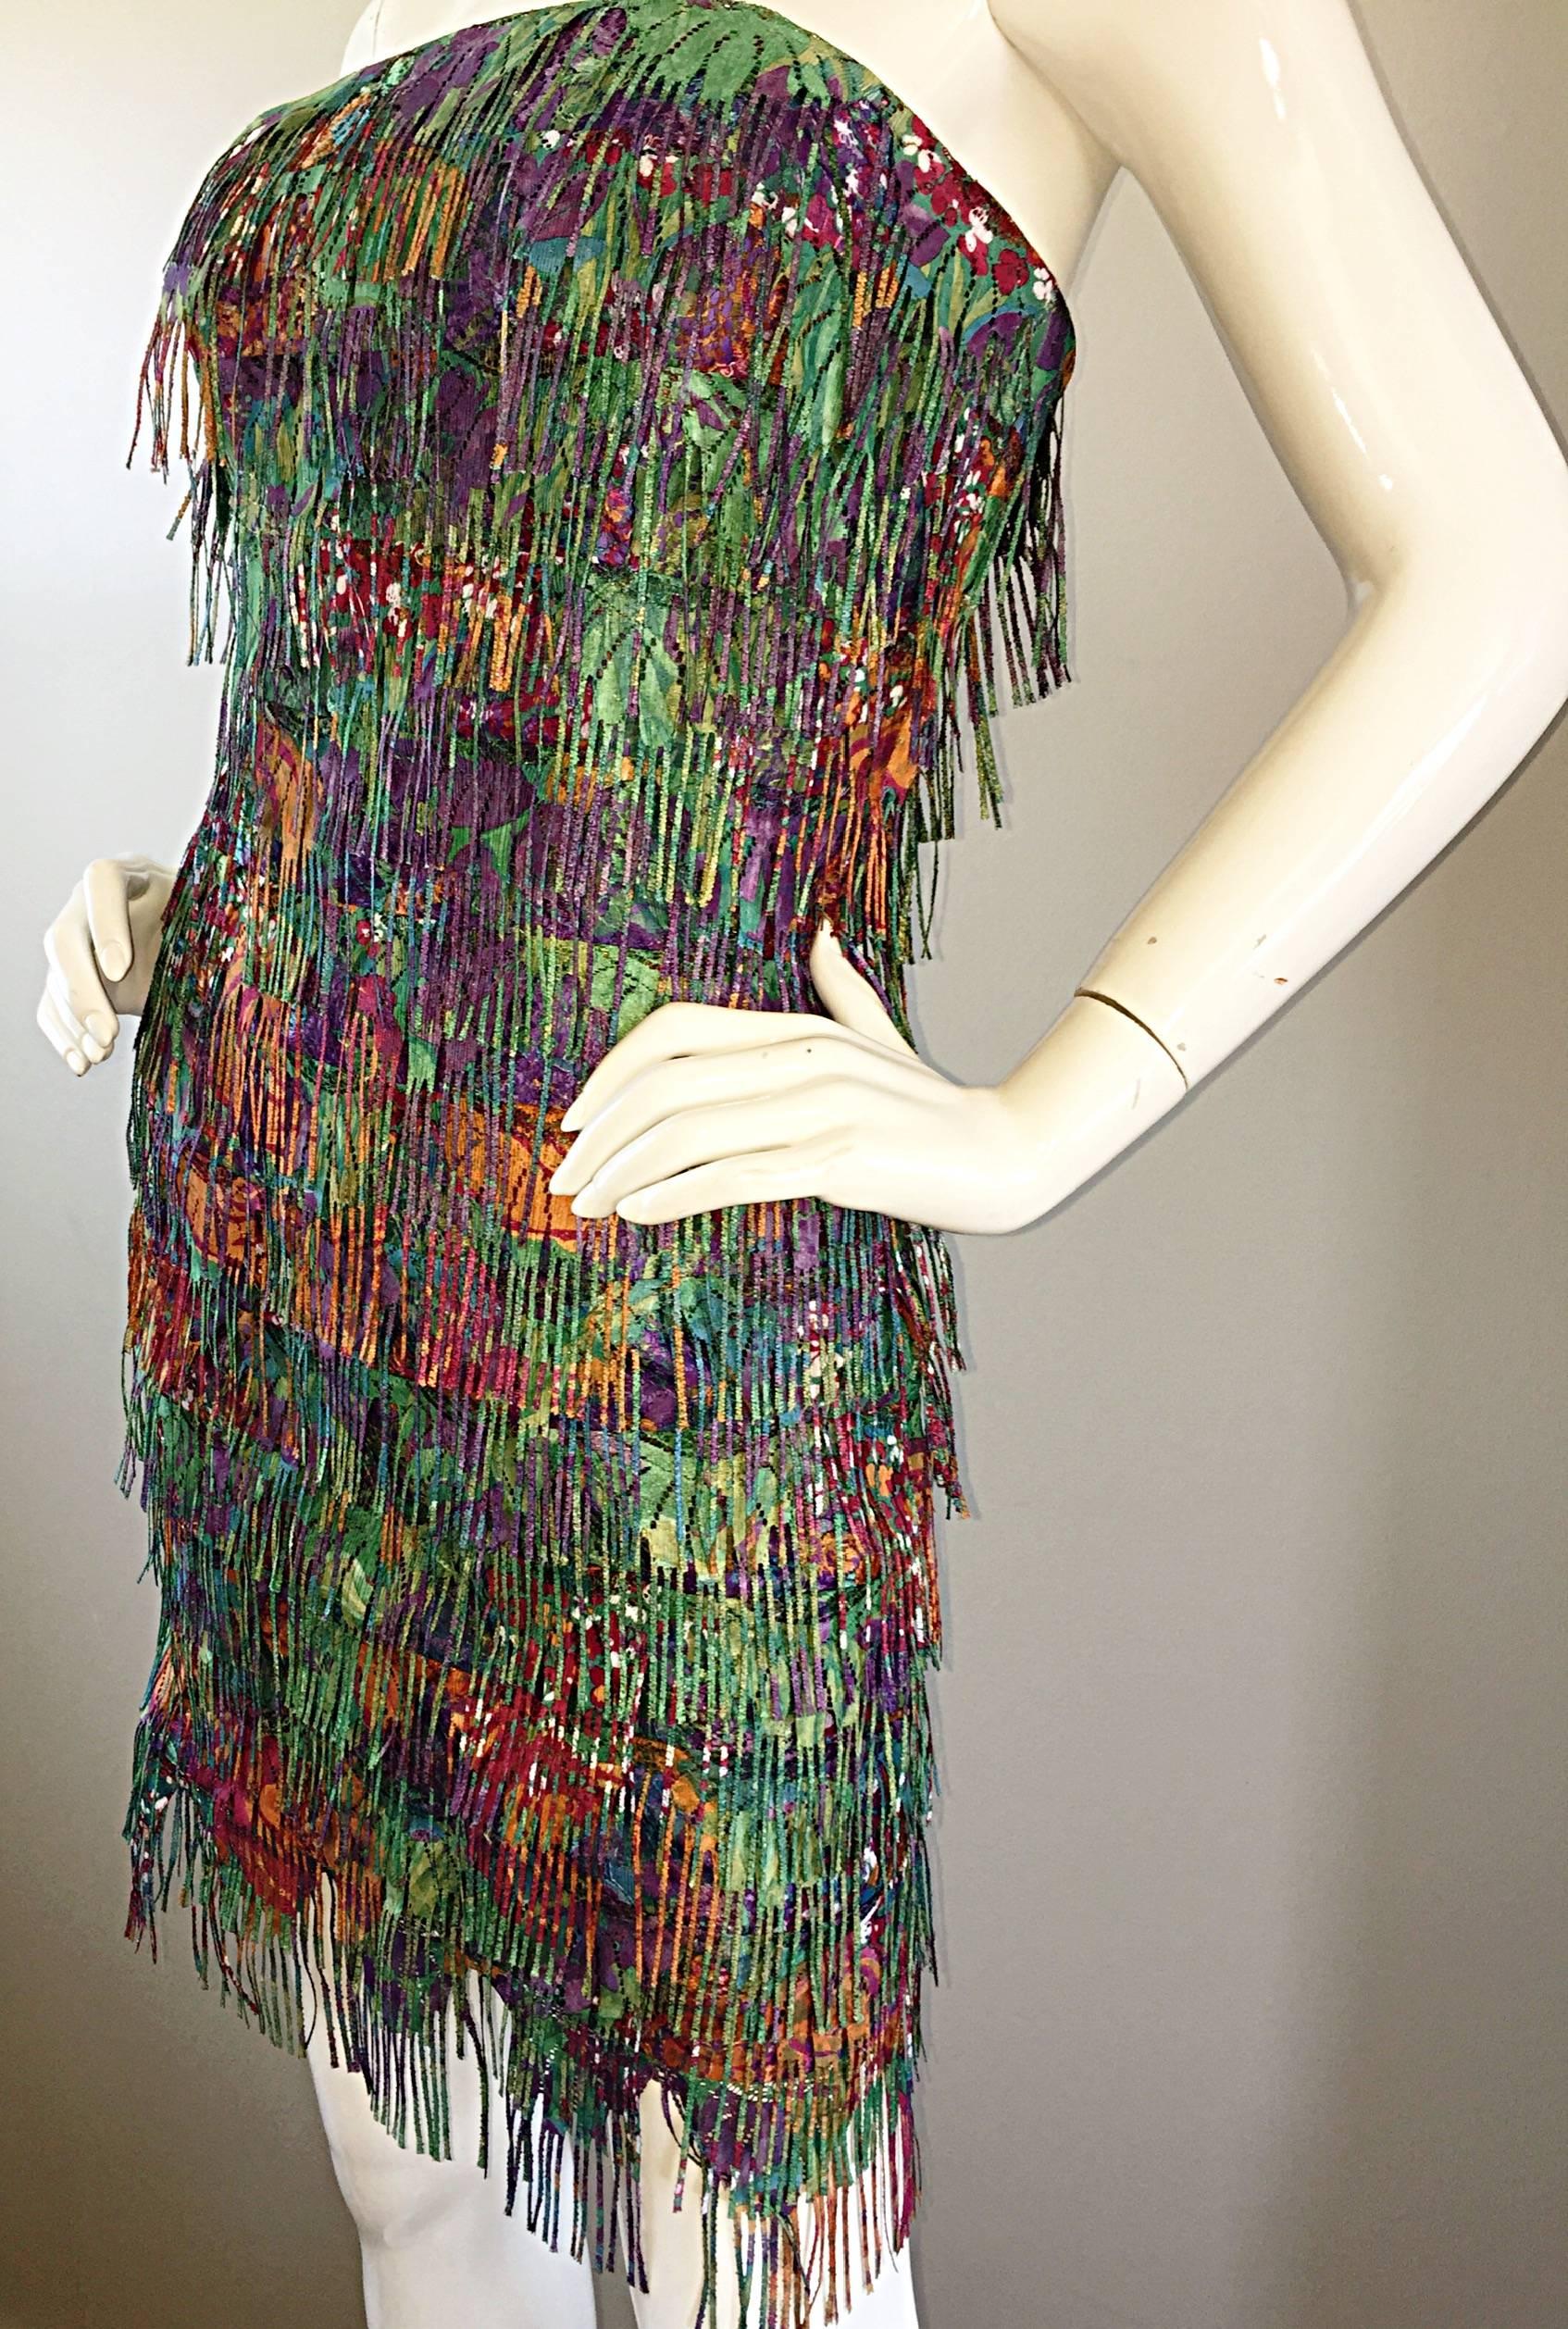 colorful fringe dress